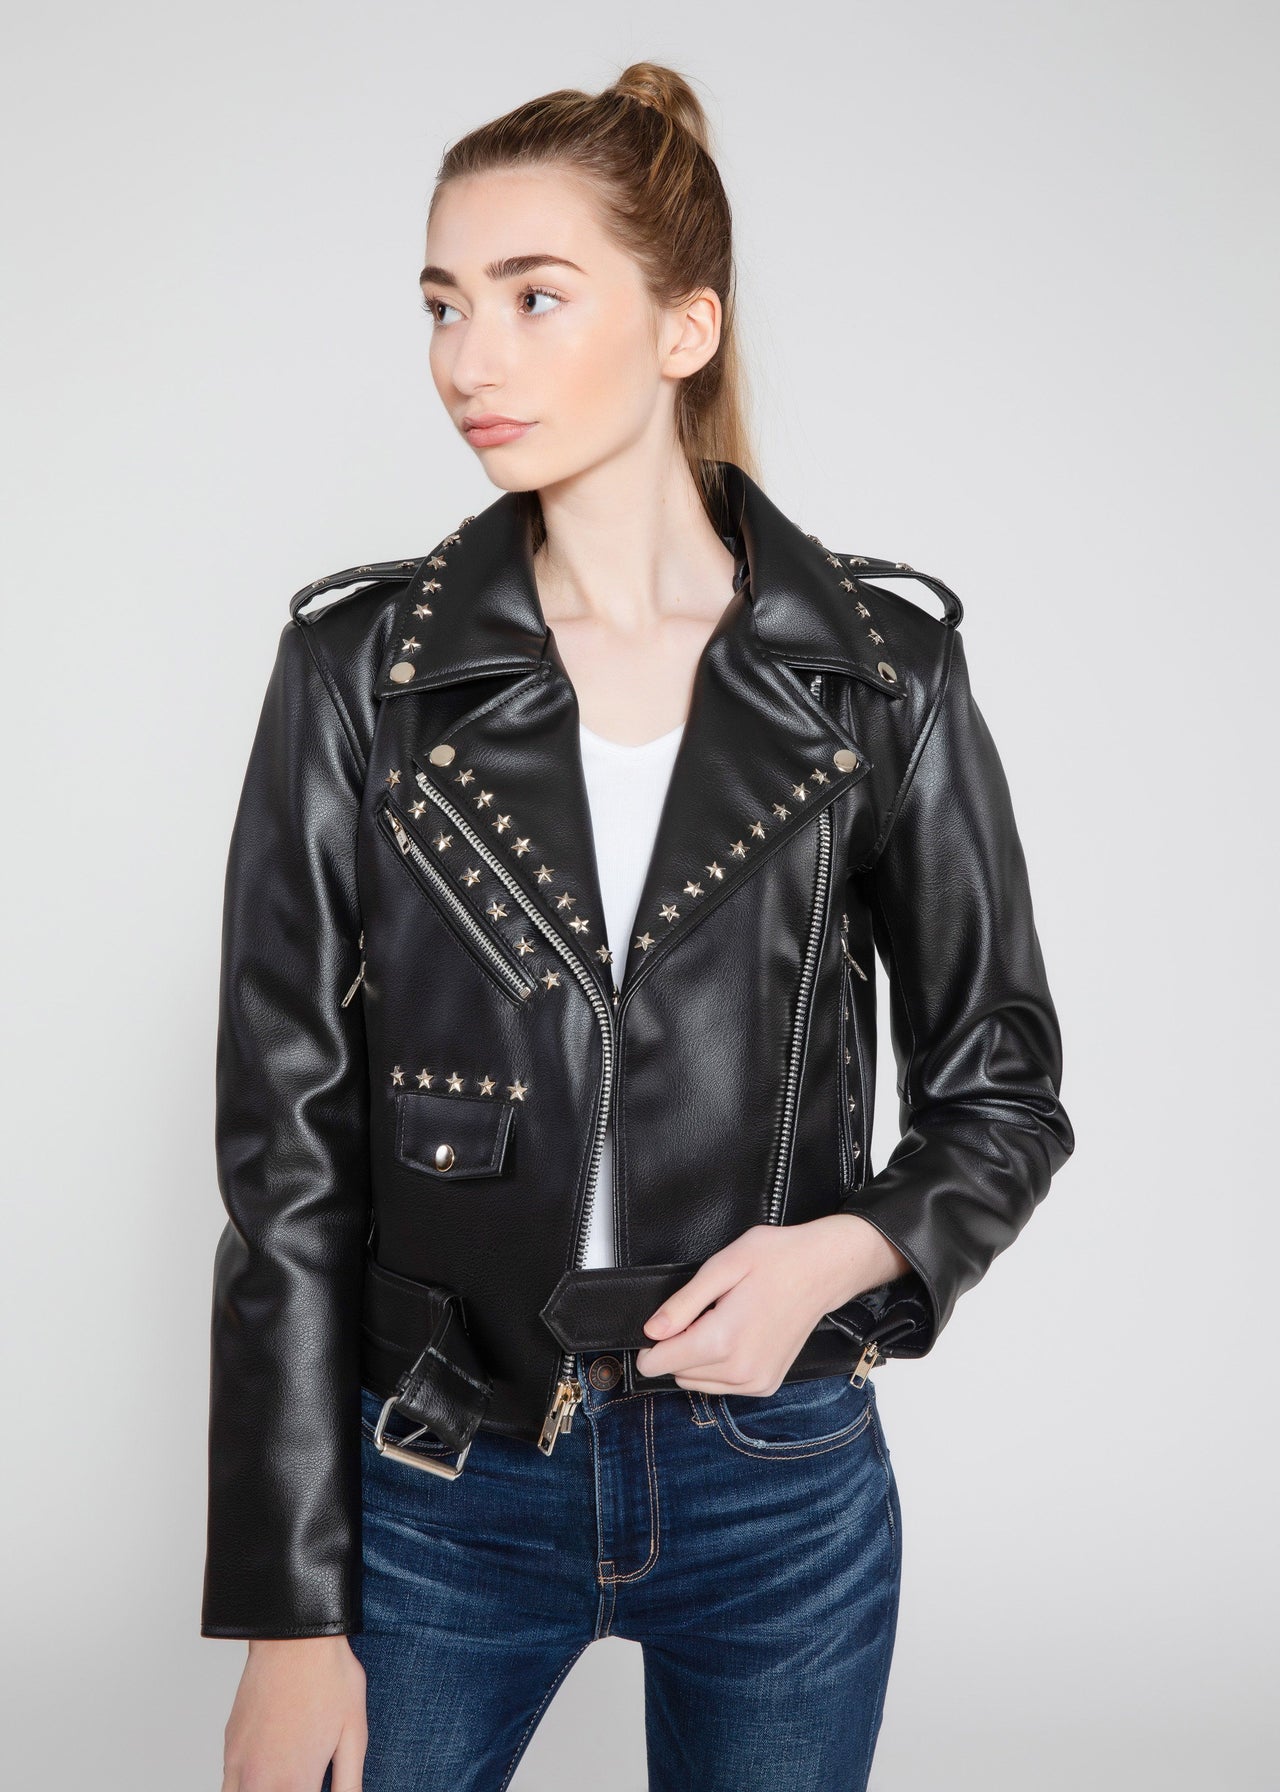 MotoArt Men's Harley or Cruiser Classic Leather Jacket – FAD